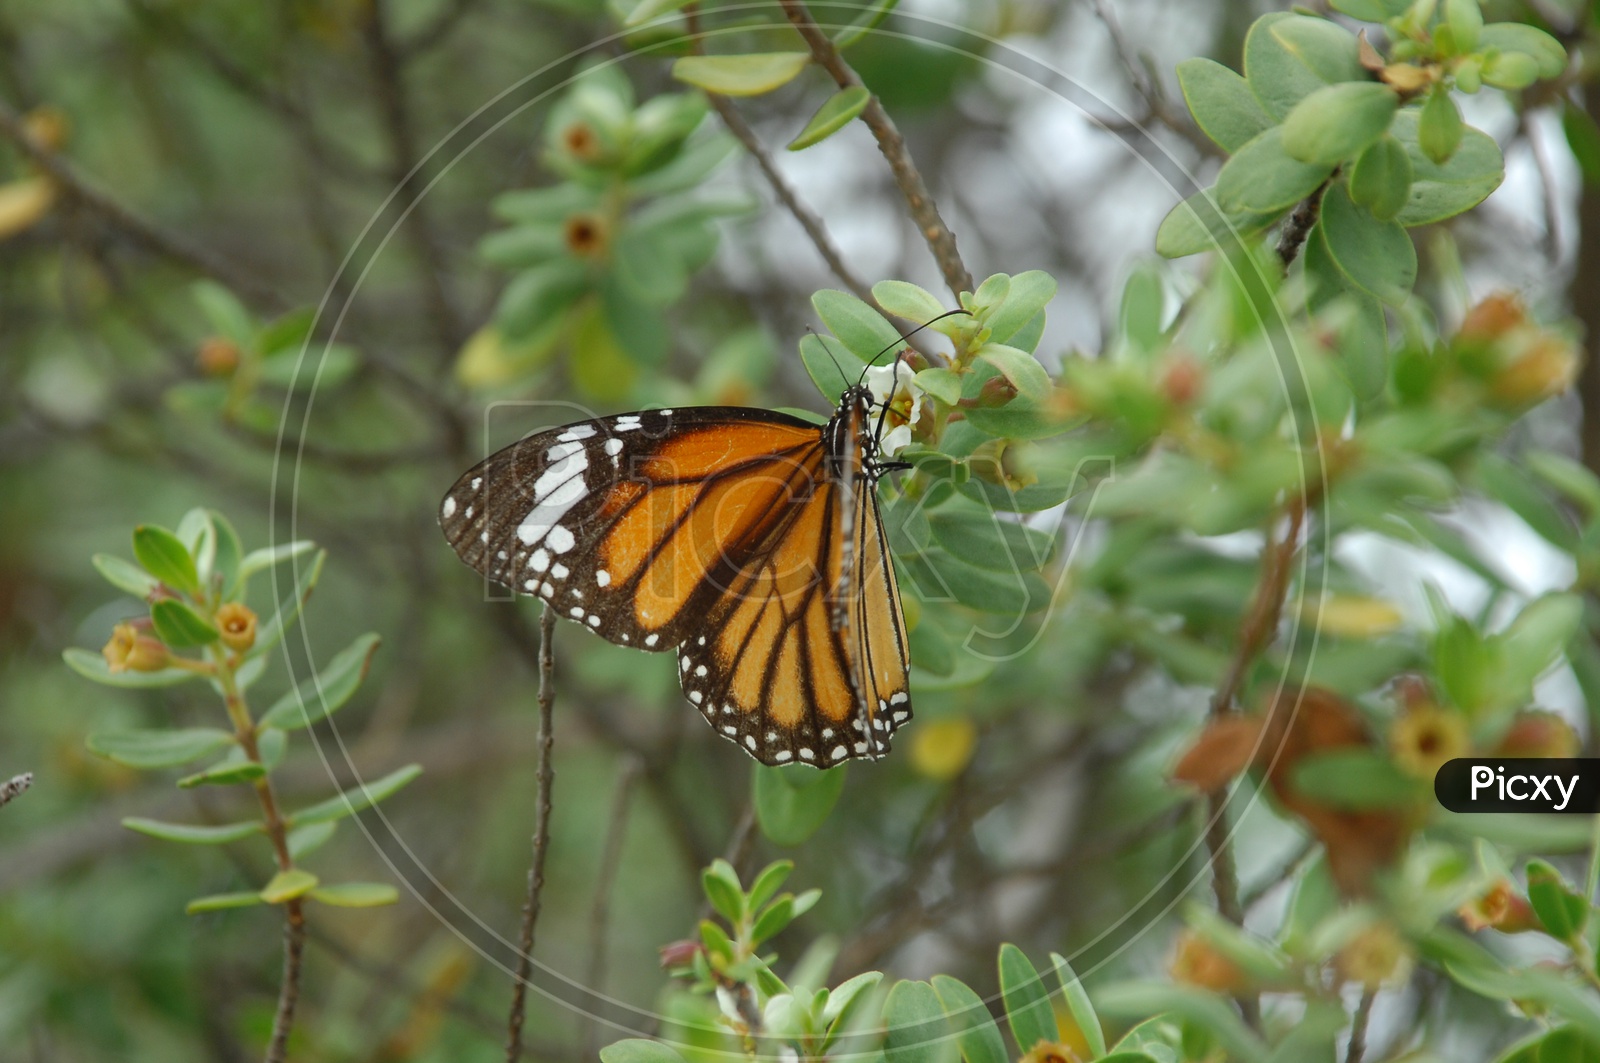 Monarch butterfly sucking nectar